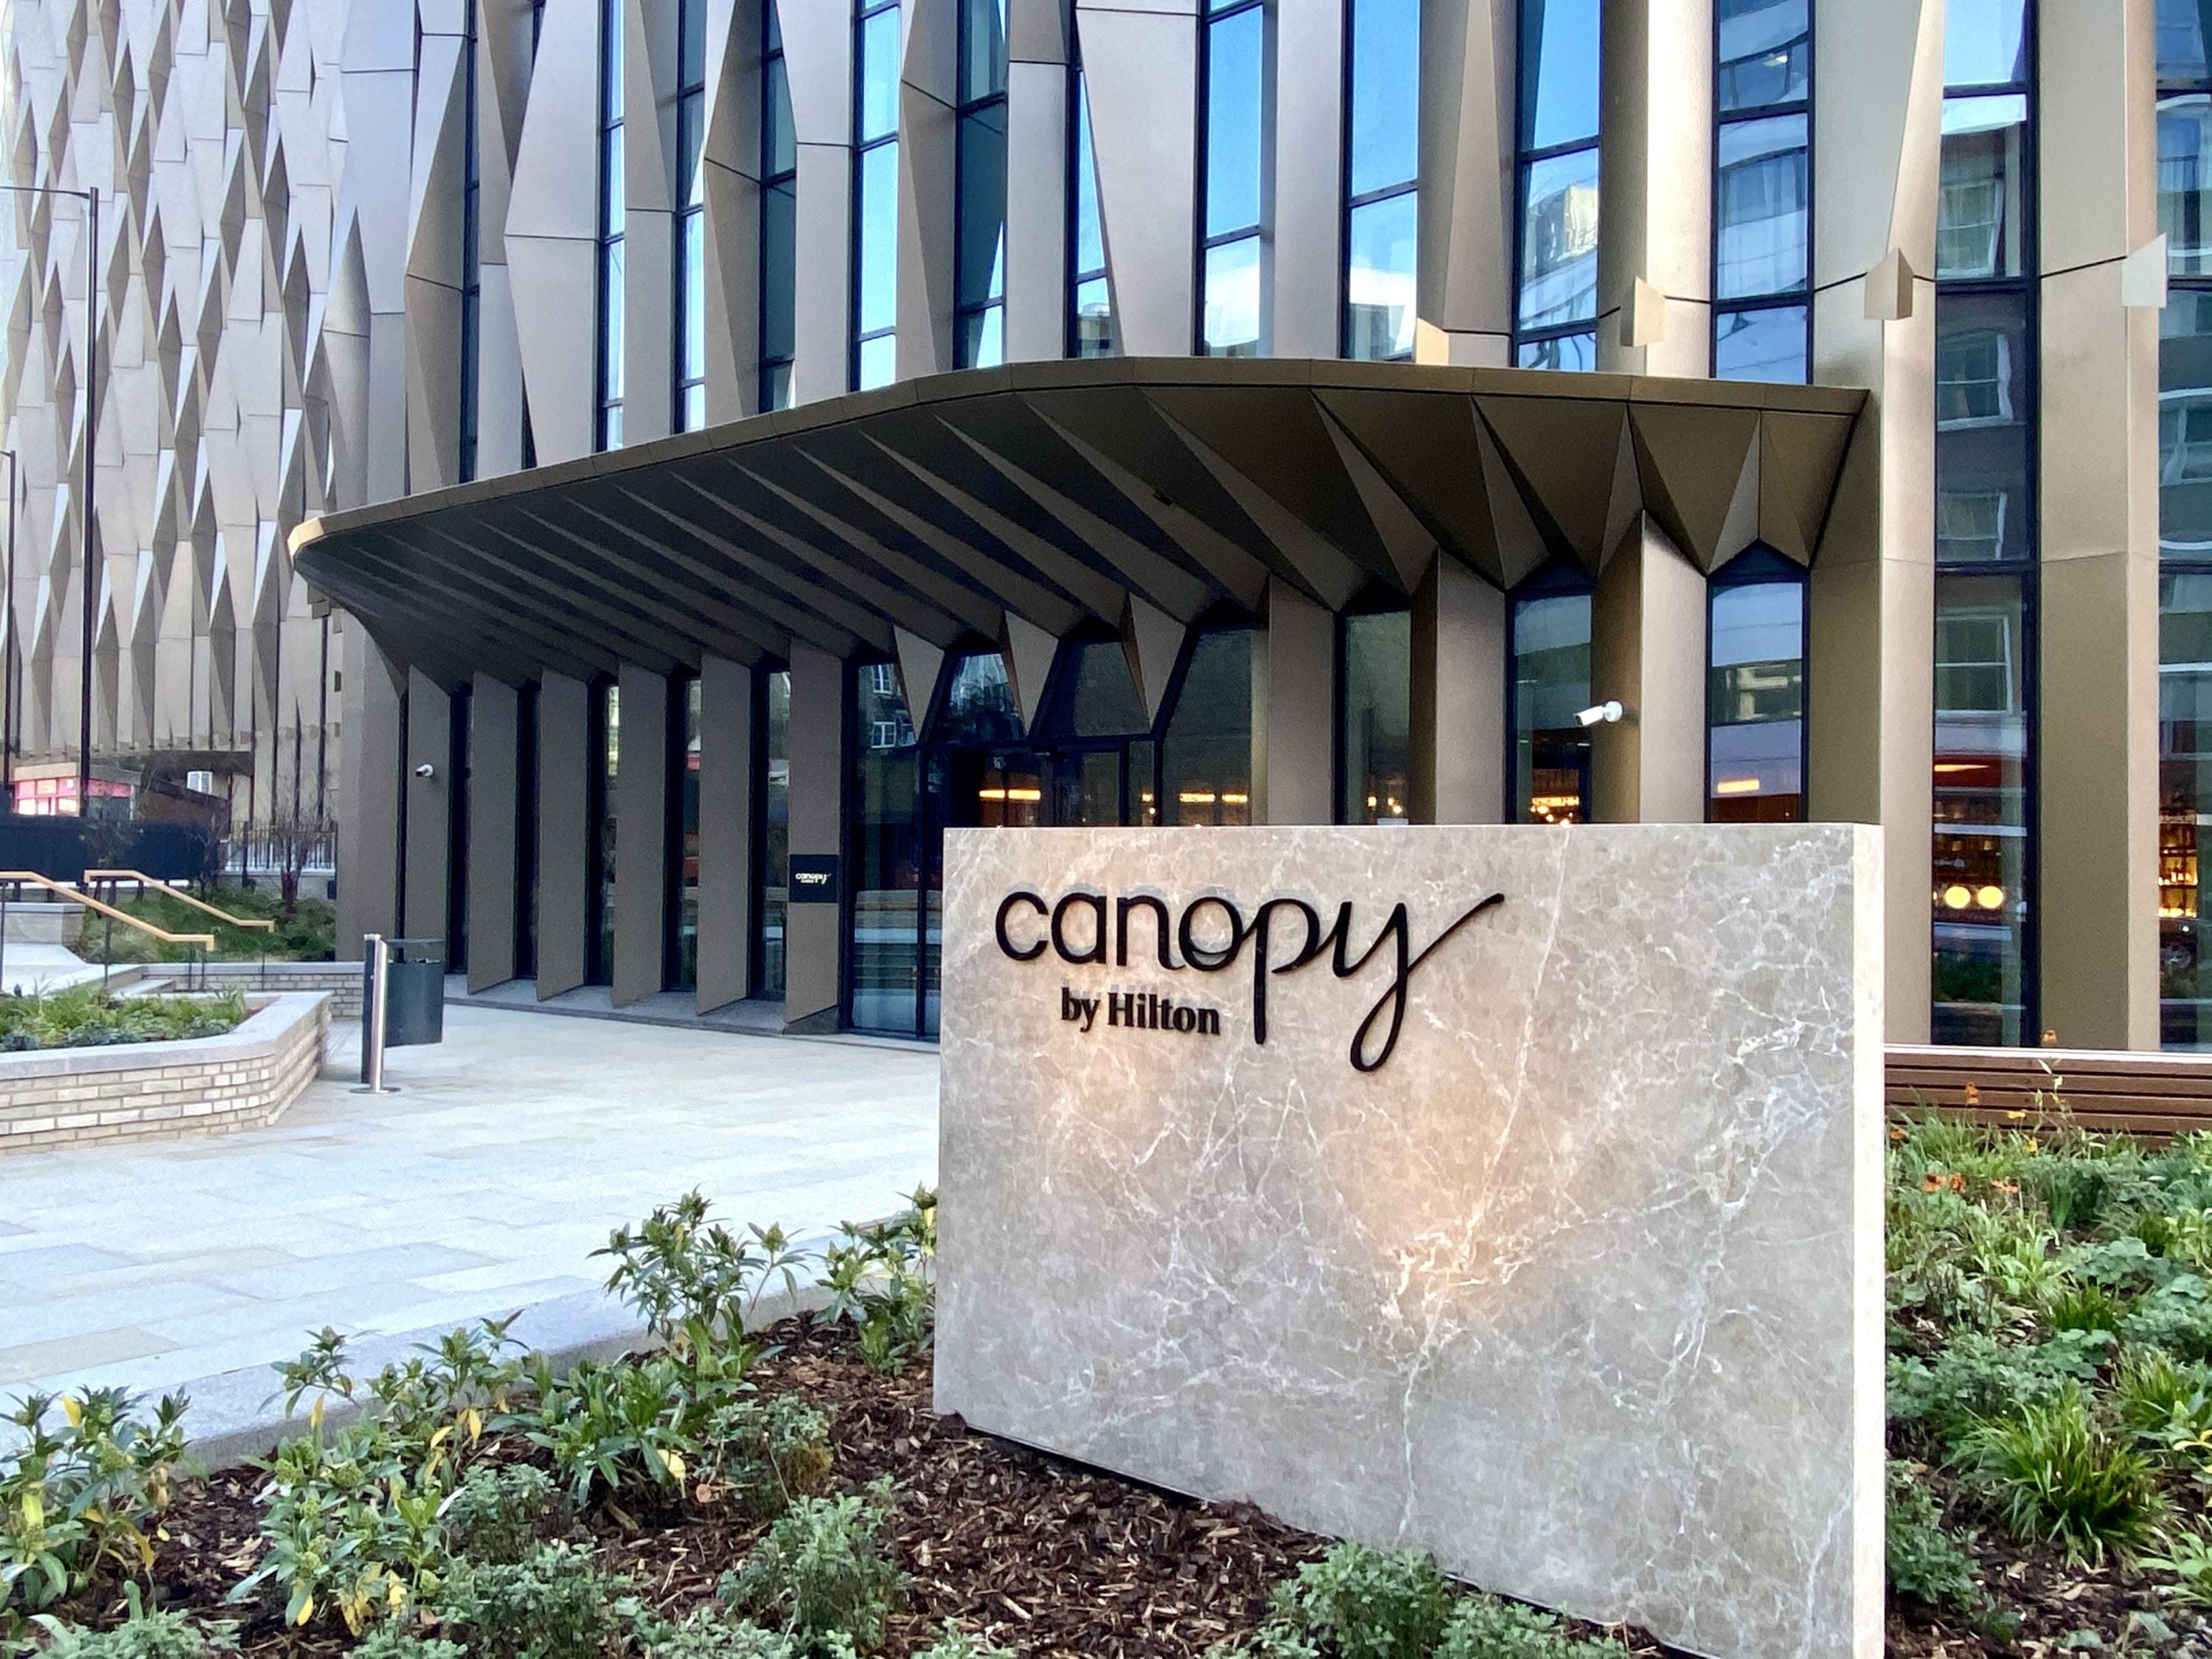 Canopy by Hilton London City signage